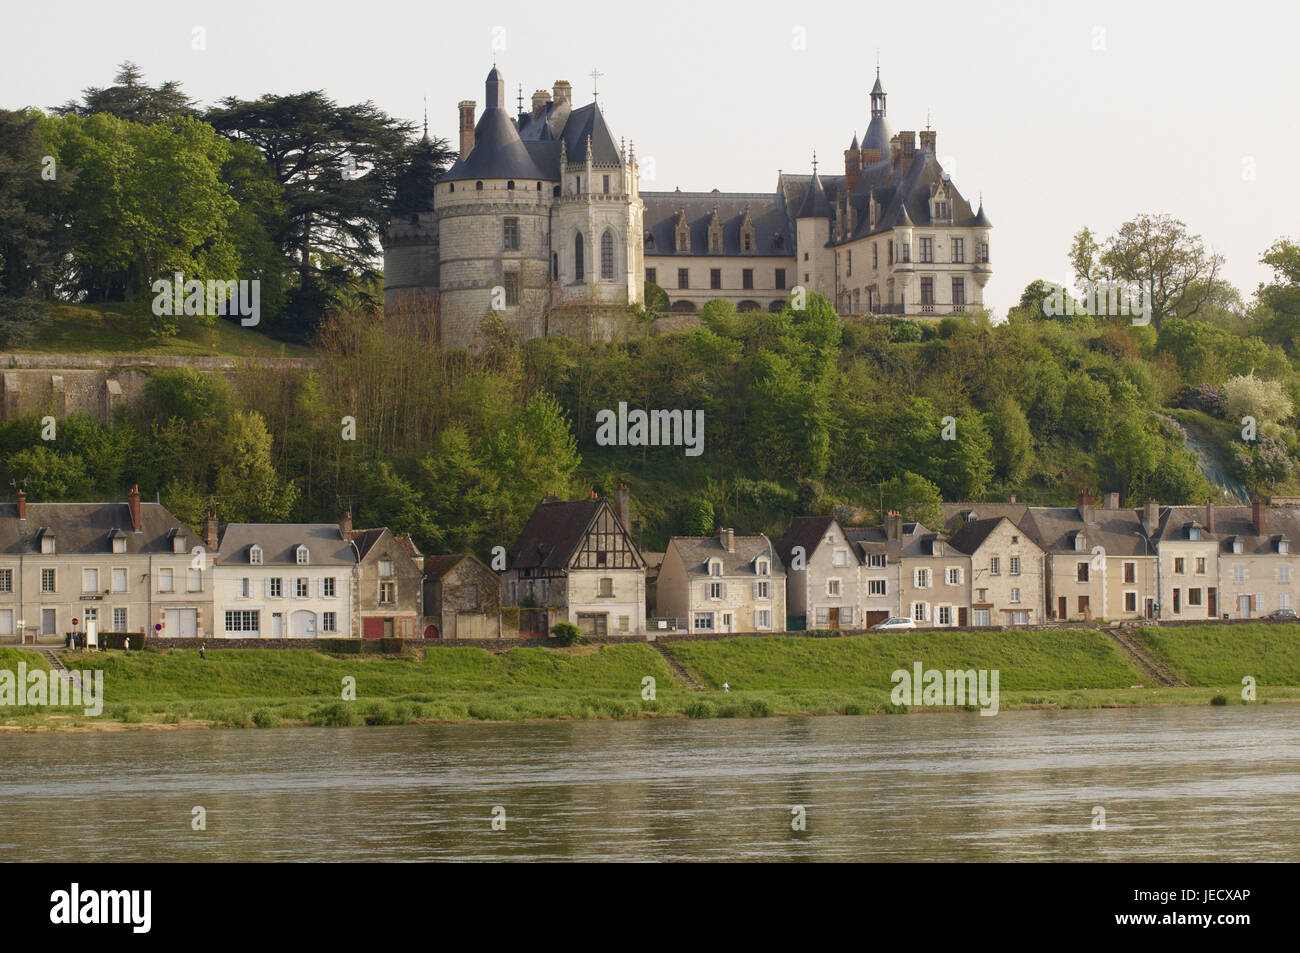 Francia, Chaumont-sur-Loire con el castillo de Chaumont, Foto de stock